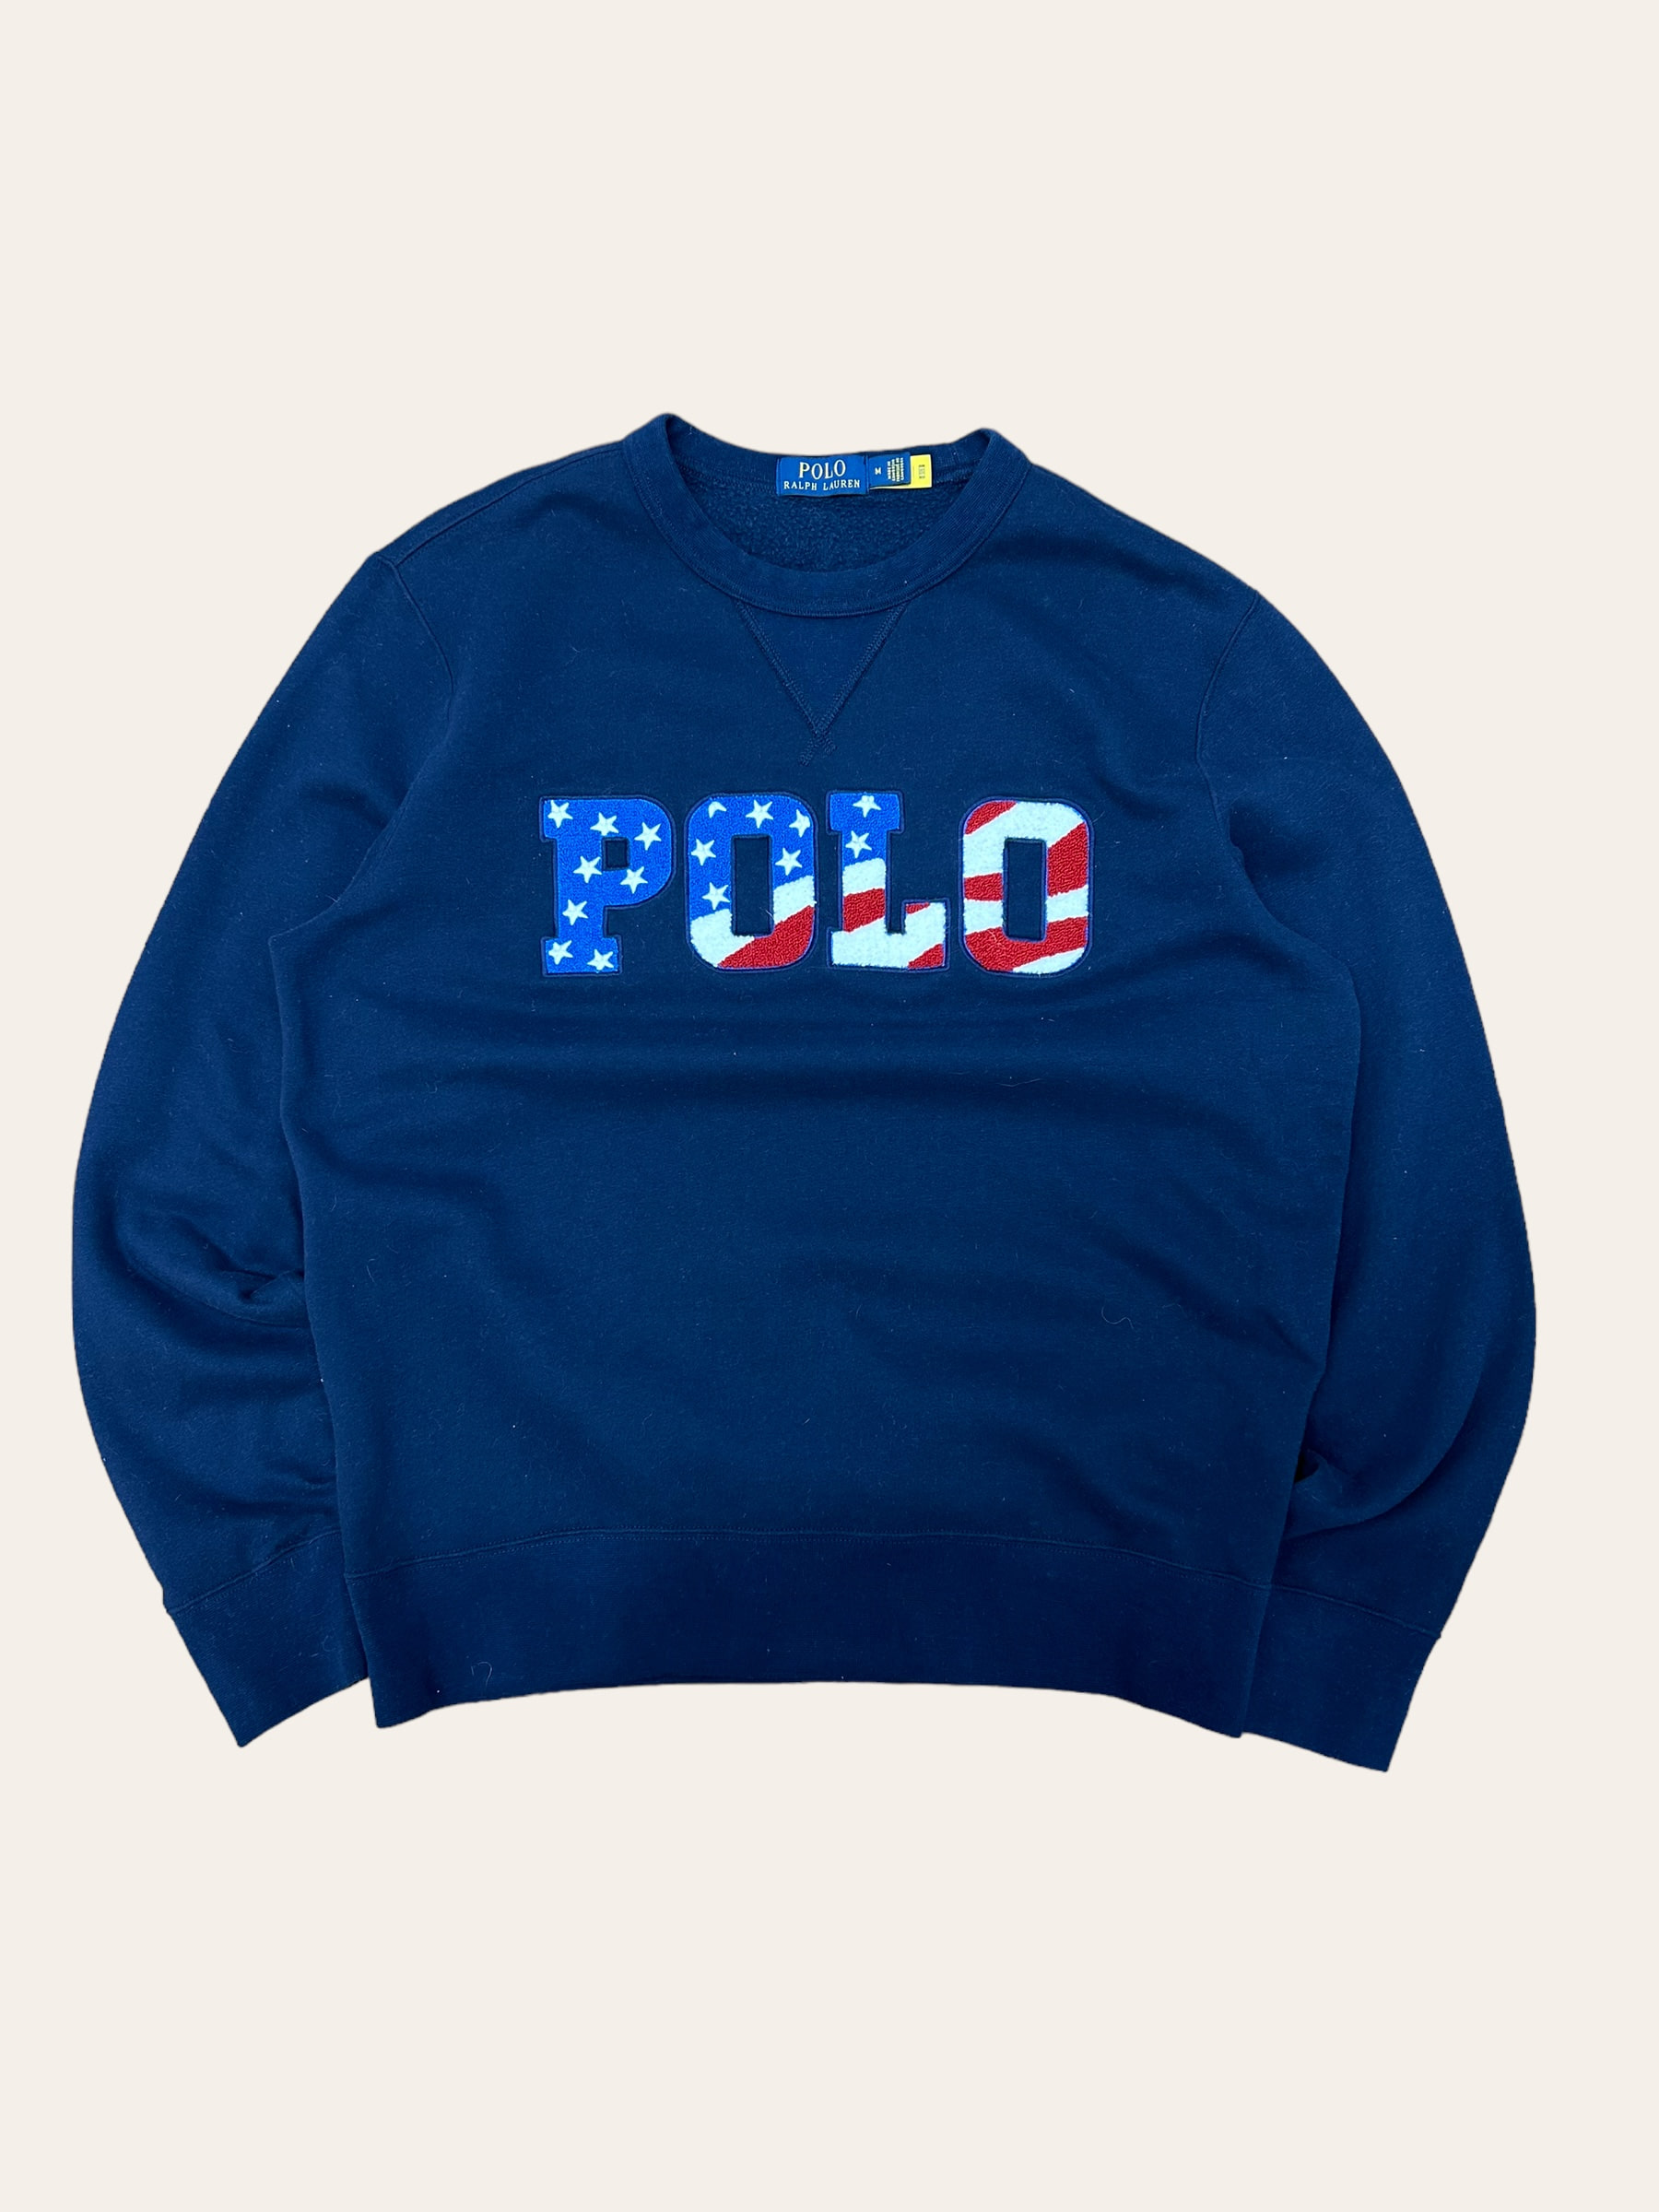 Polo ralph lauren navy spell out sweatshirt M